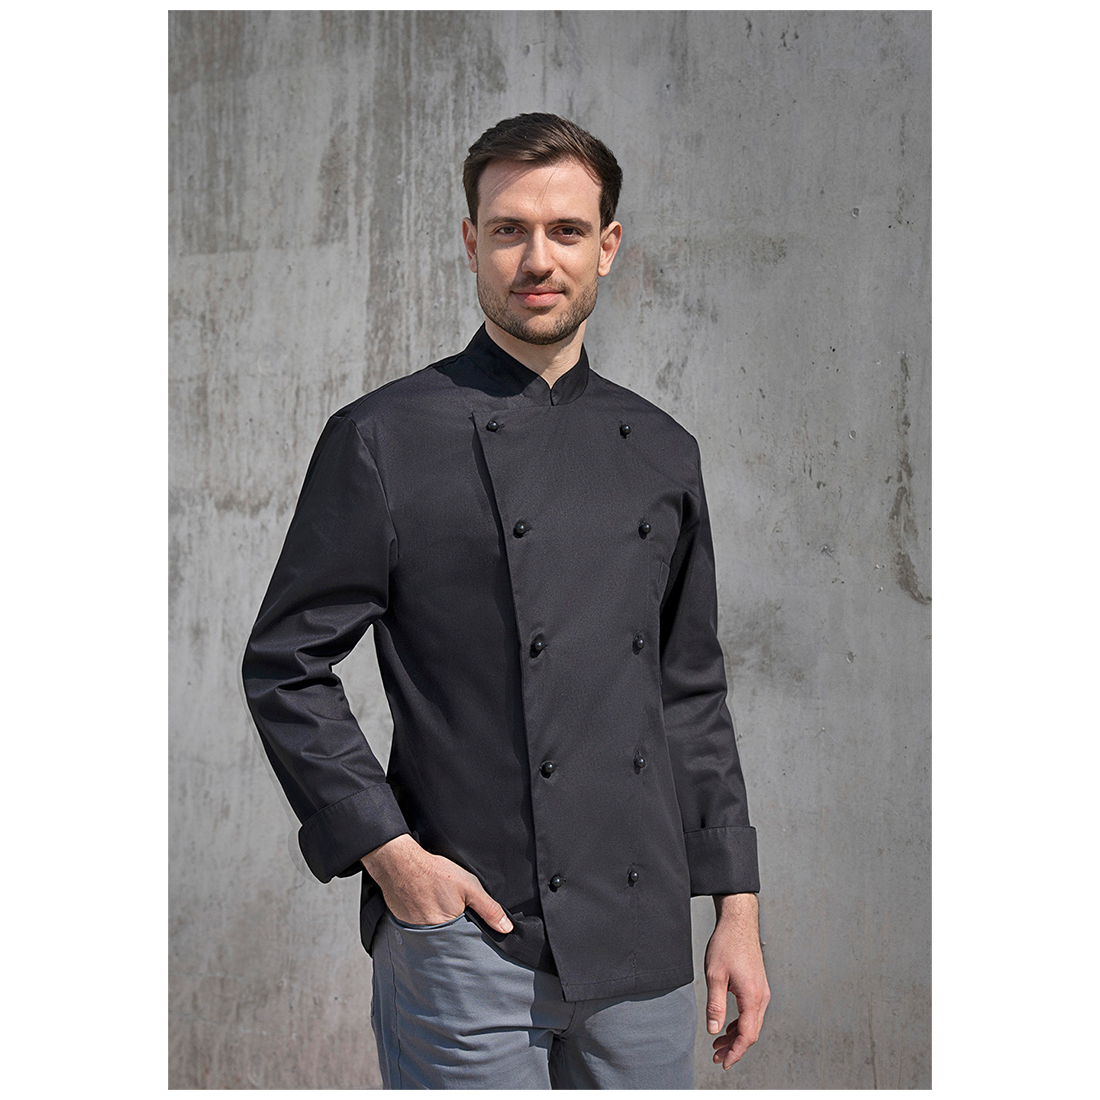 Chef Jacket Thomas KW - Safetywear